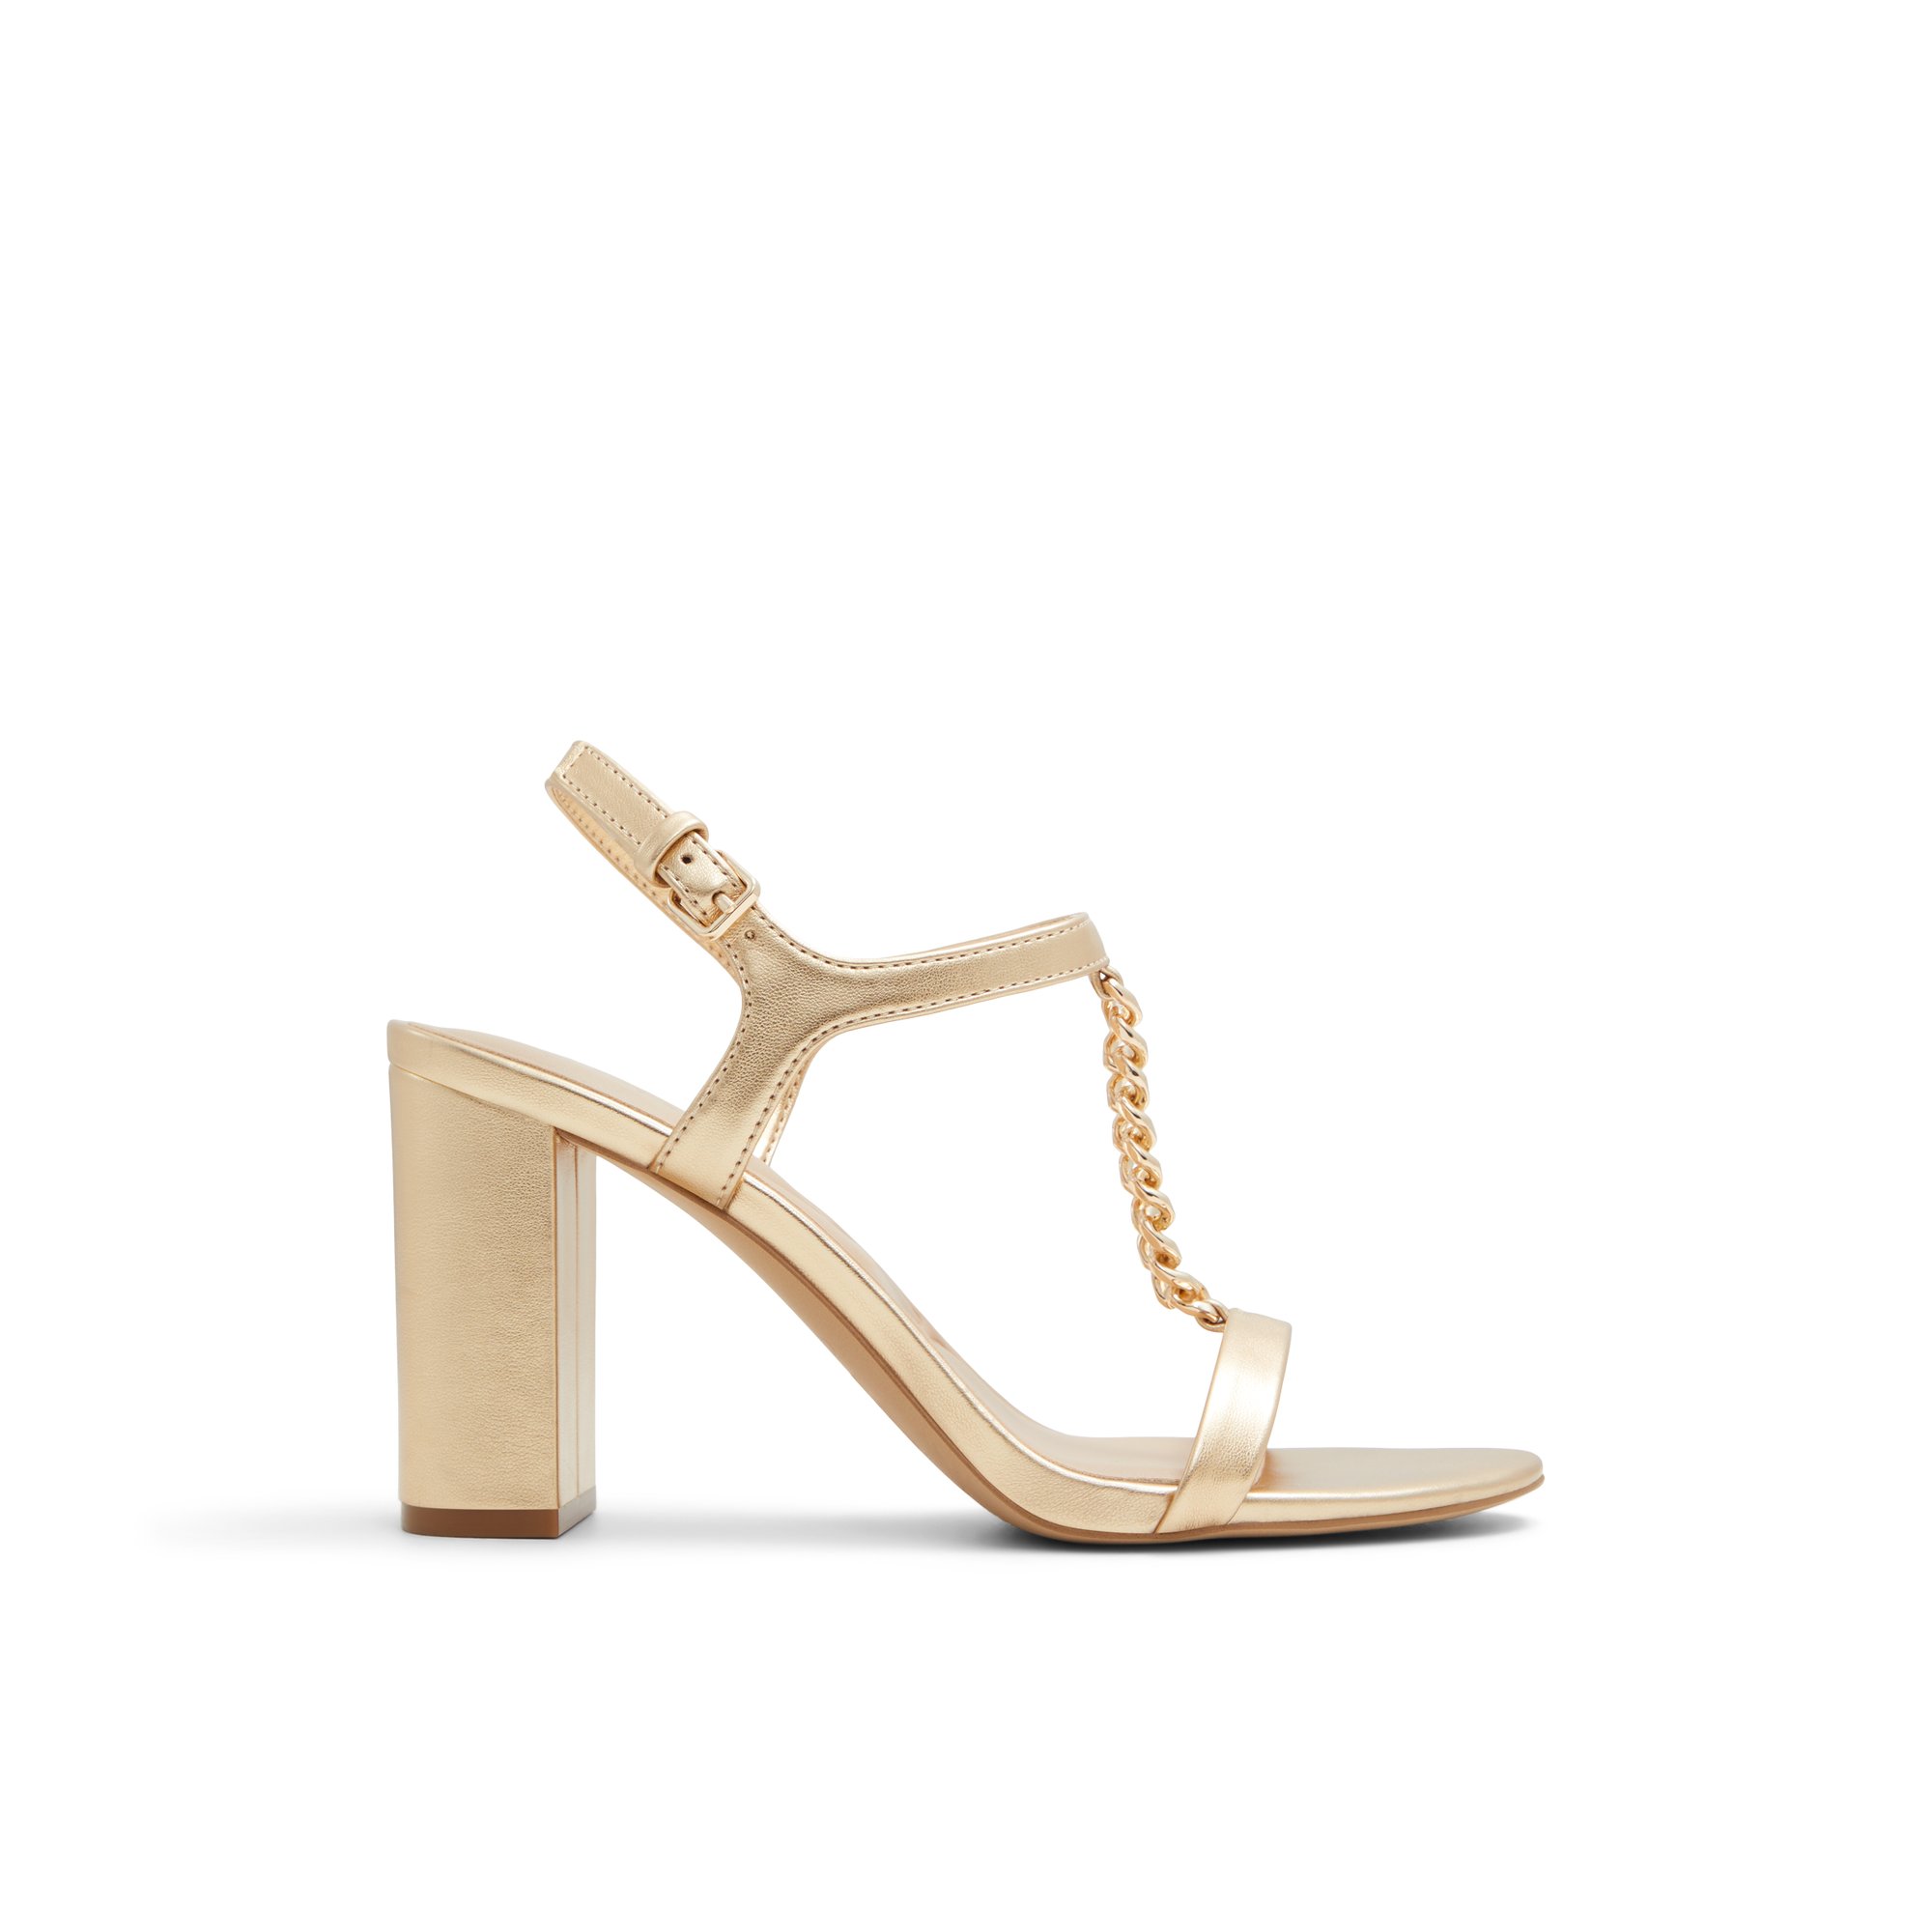 ALDO Clelia - Women's Strappy Sandal Sandals - Gold